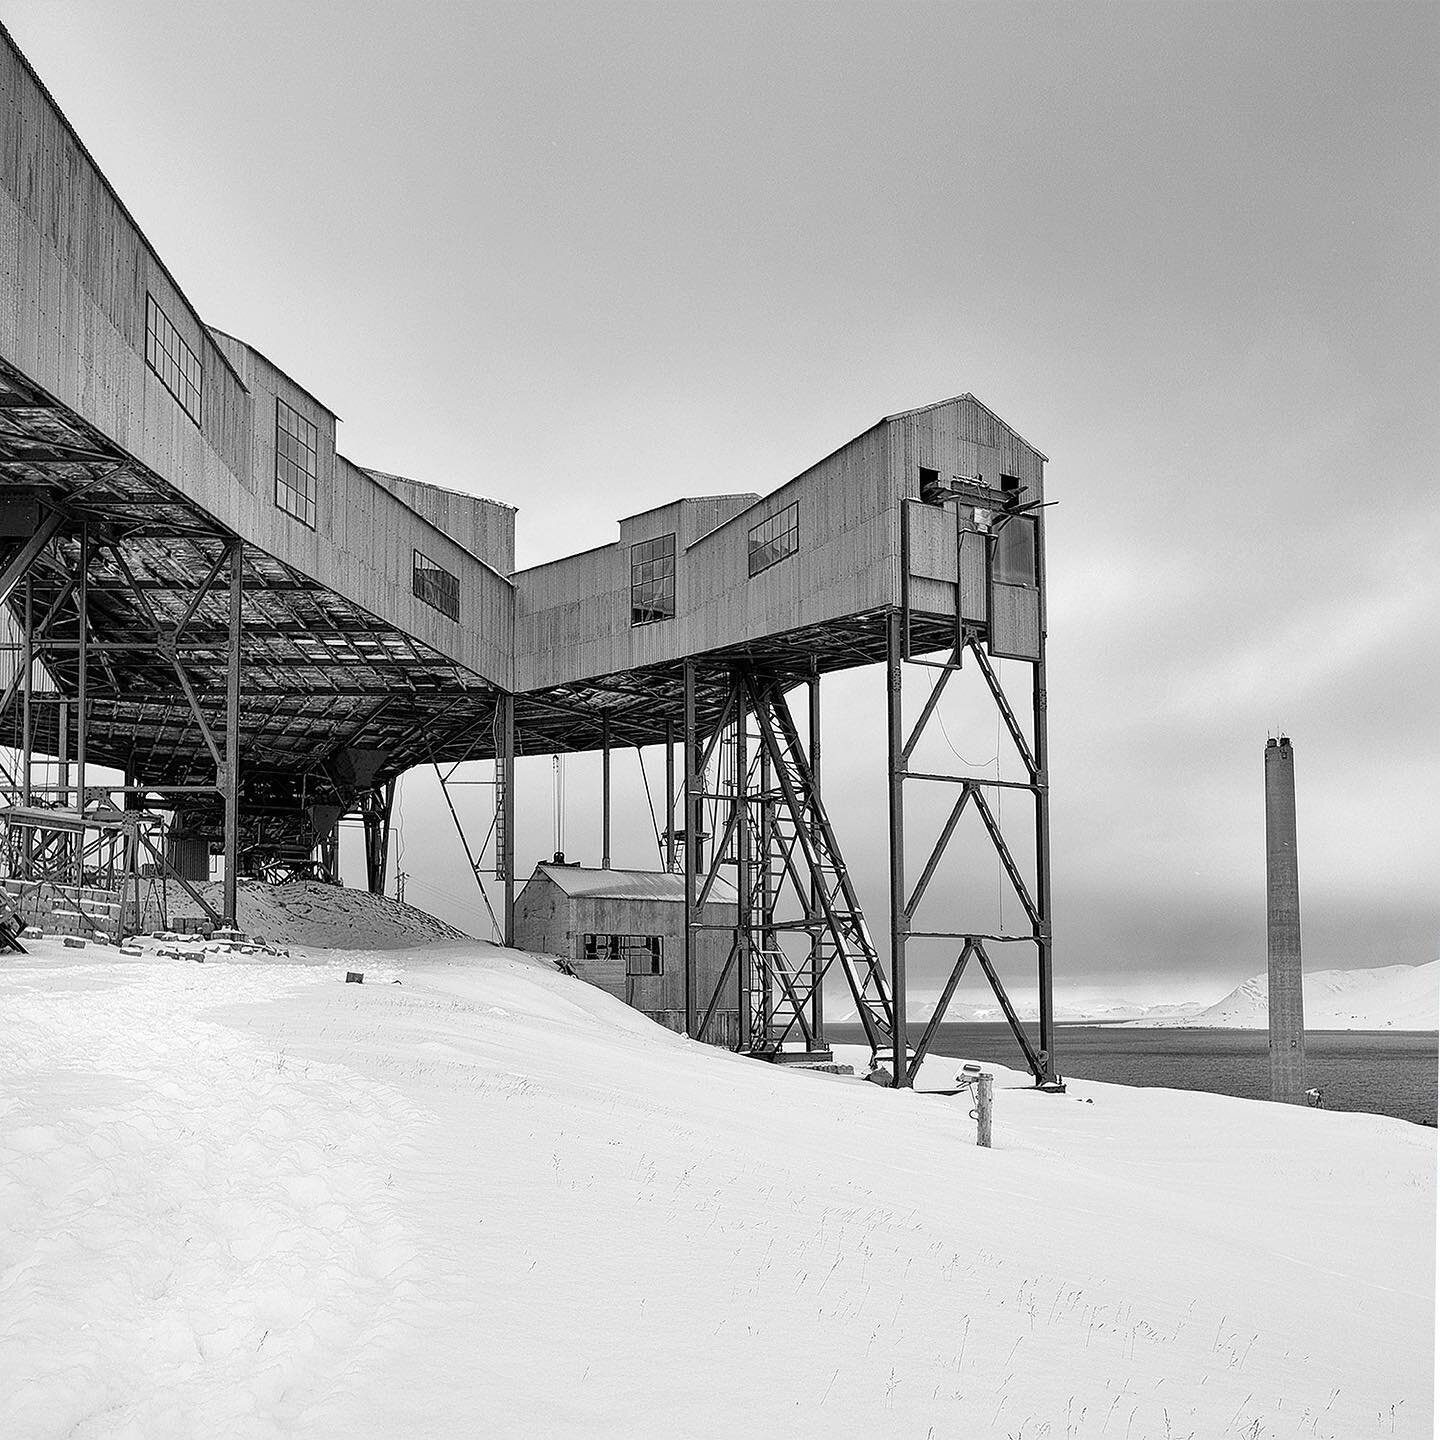 ABANDONED COALMINE ⁠⁠
⁠⁠
#AbandonedCoalMine #Longyearbyen #Spitsbergen #Svalbard #Arctic #Norway #midnightsun #chimneystack⁠⁠
#monochromatic #fineartphotographer #abstractphotography #fujifilm#X-T3⁠⁠